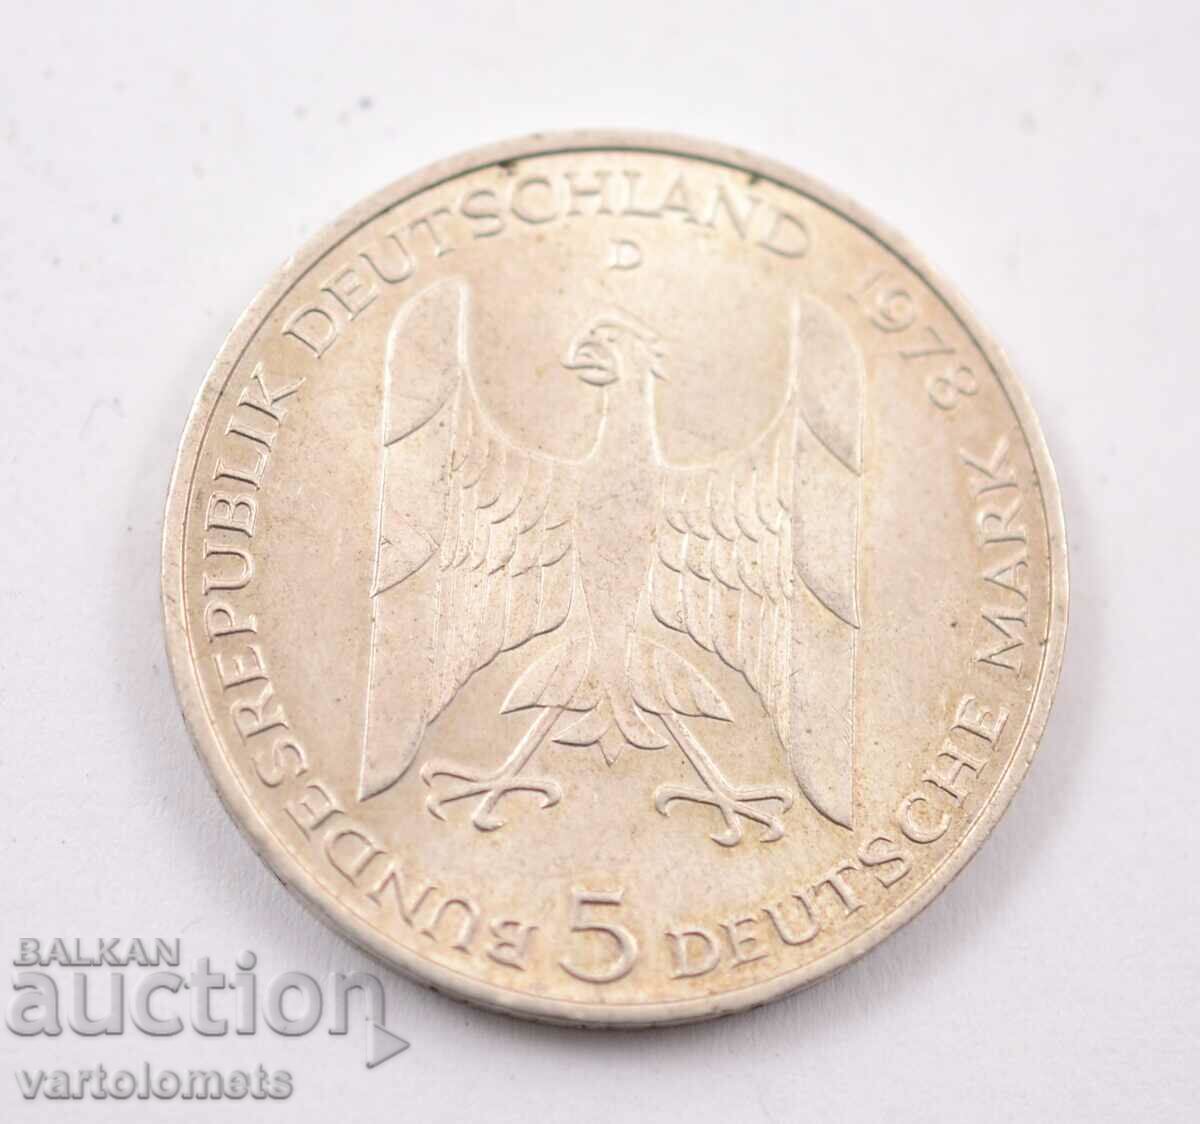 5 timbre 1978 - Germania RFA, argint 625/ 11,2 g.